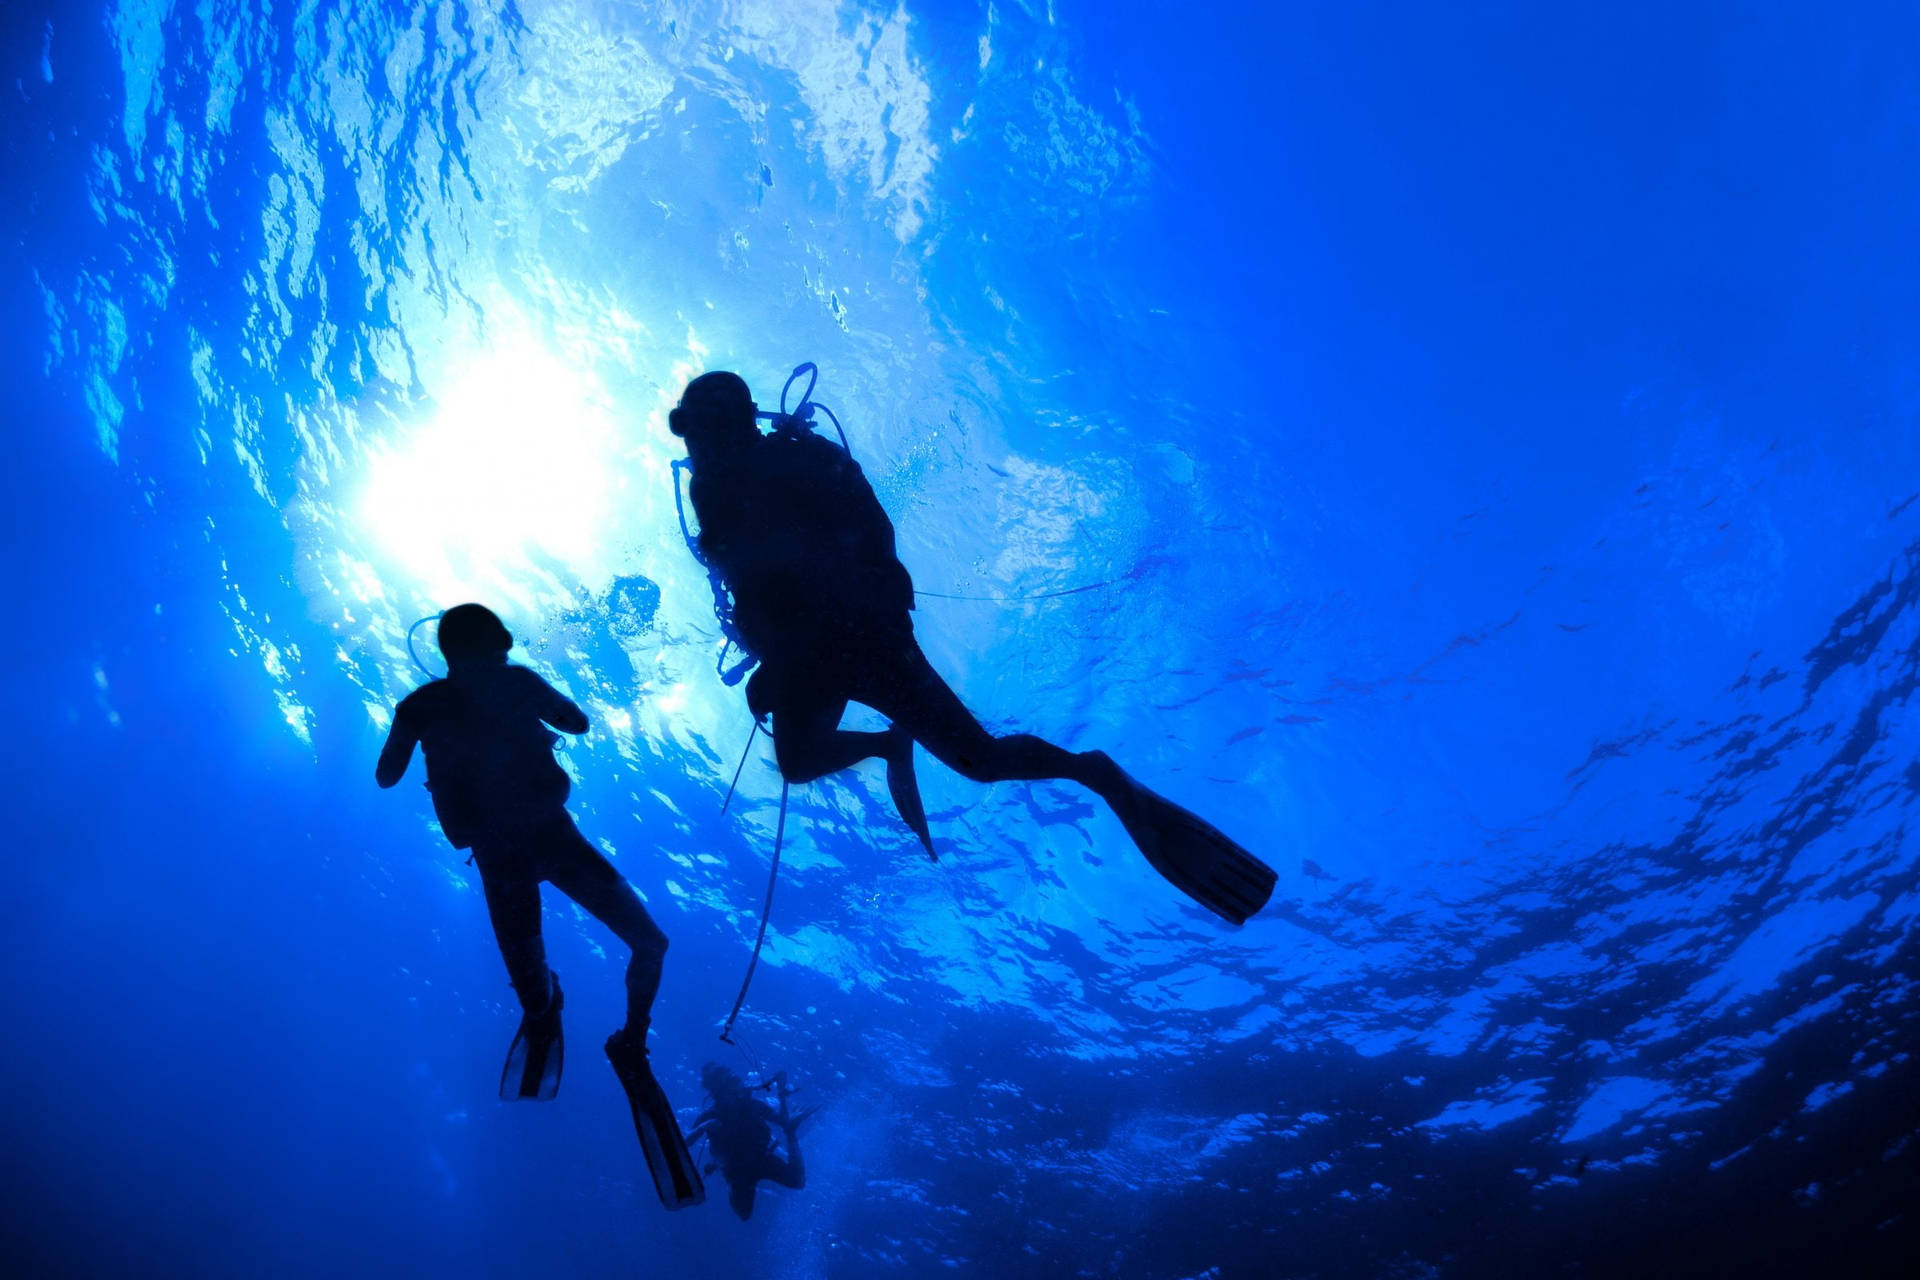 scuba diving silhouette